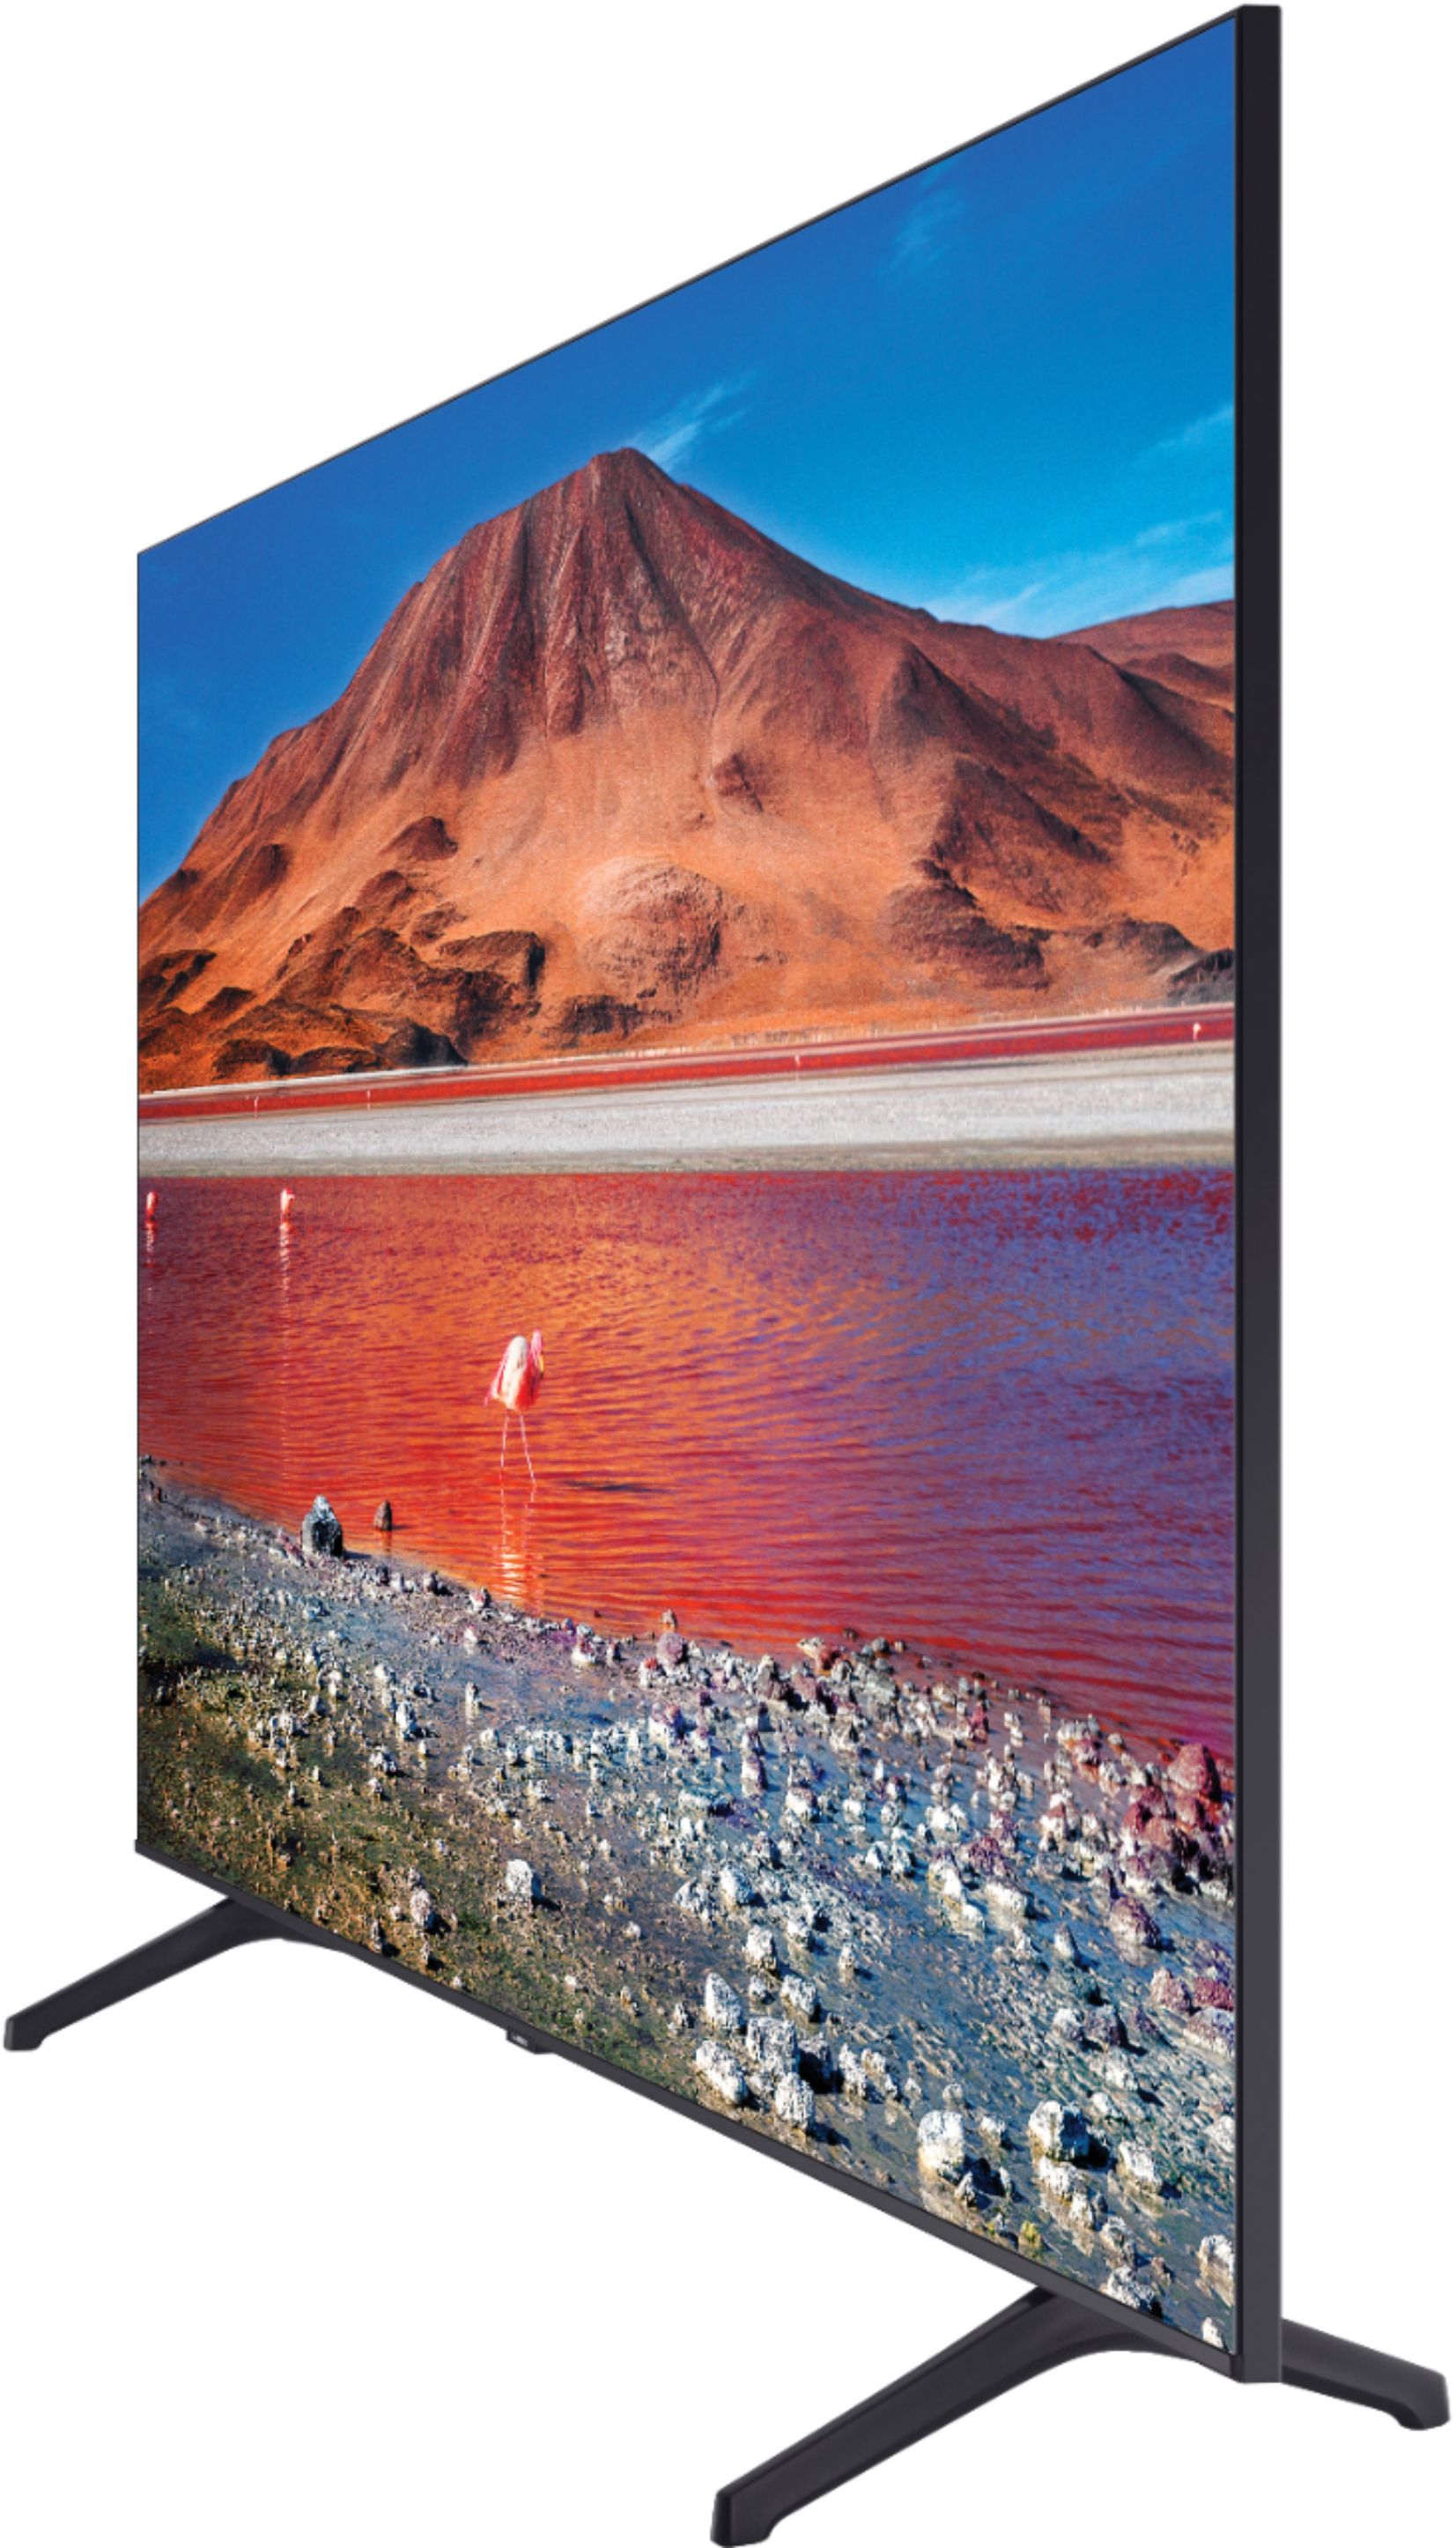 4K UHD HDR Smart TV with Alexa Built-in UN50TU7000FXZA, 2020 Model Samsung 50-inch Class Crystal UHD TU-7000 Series